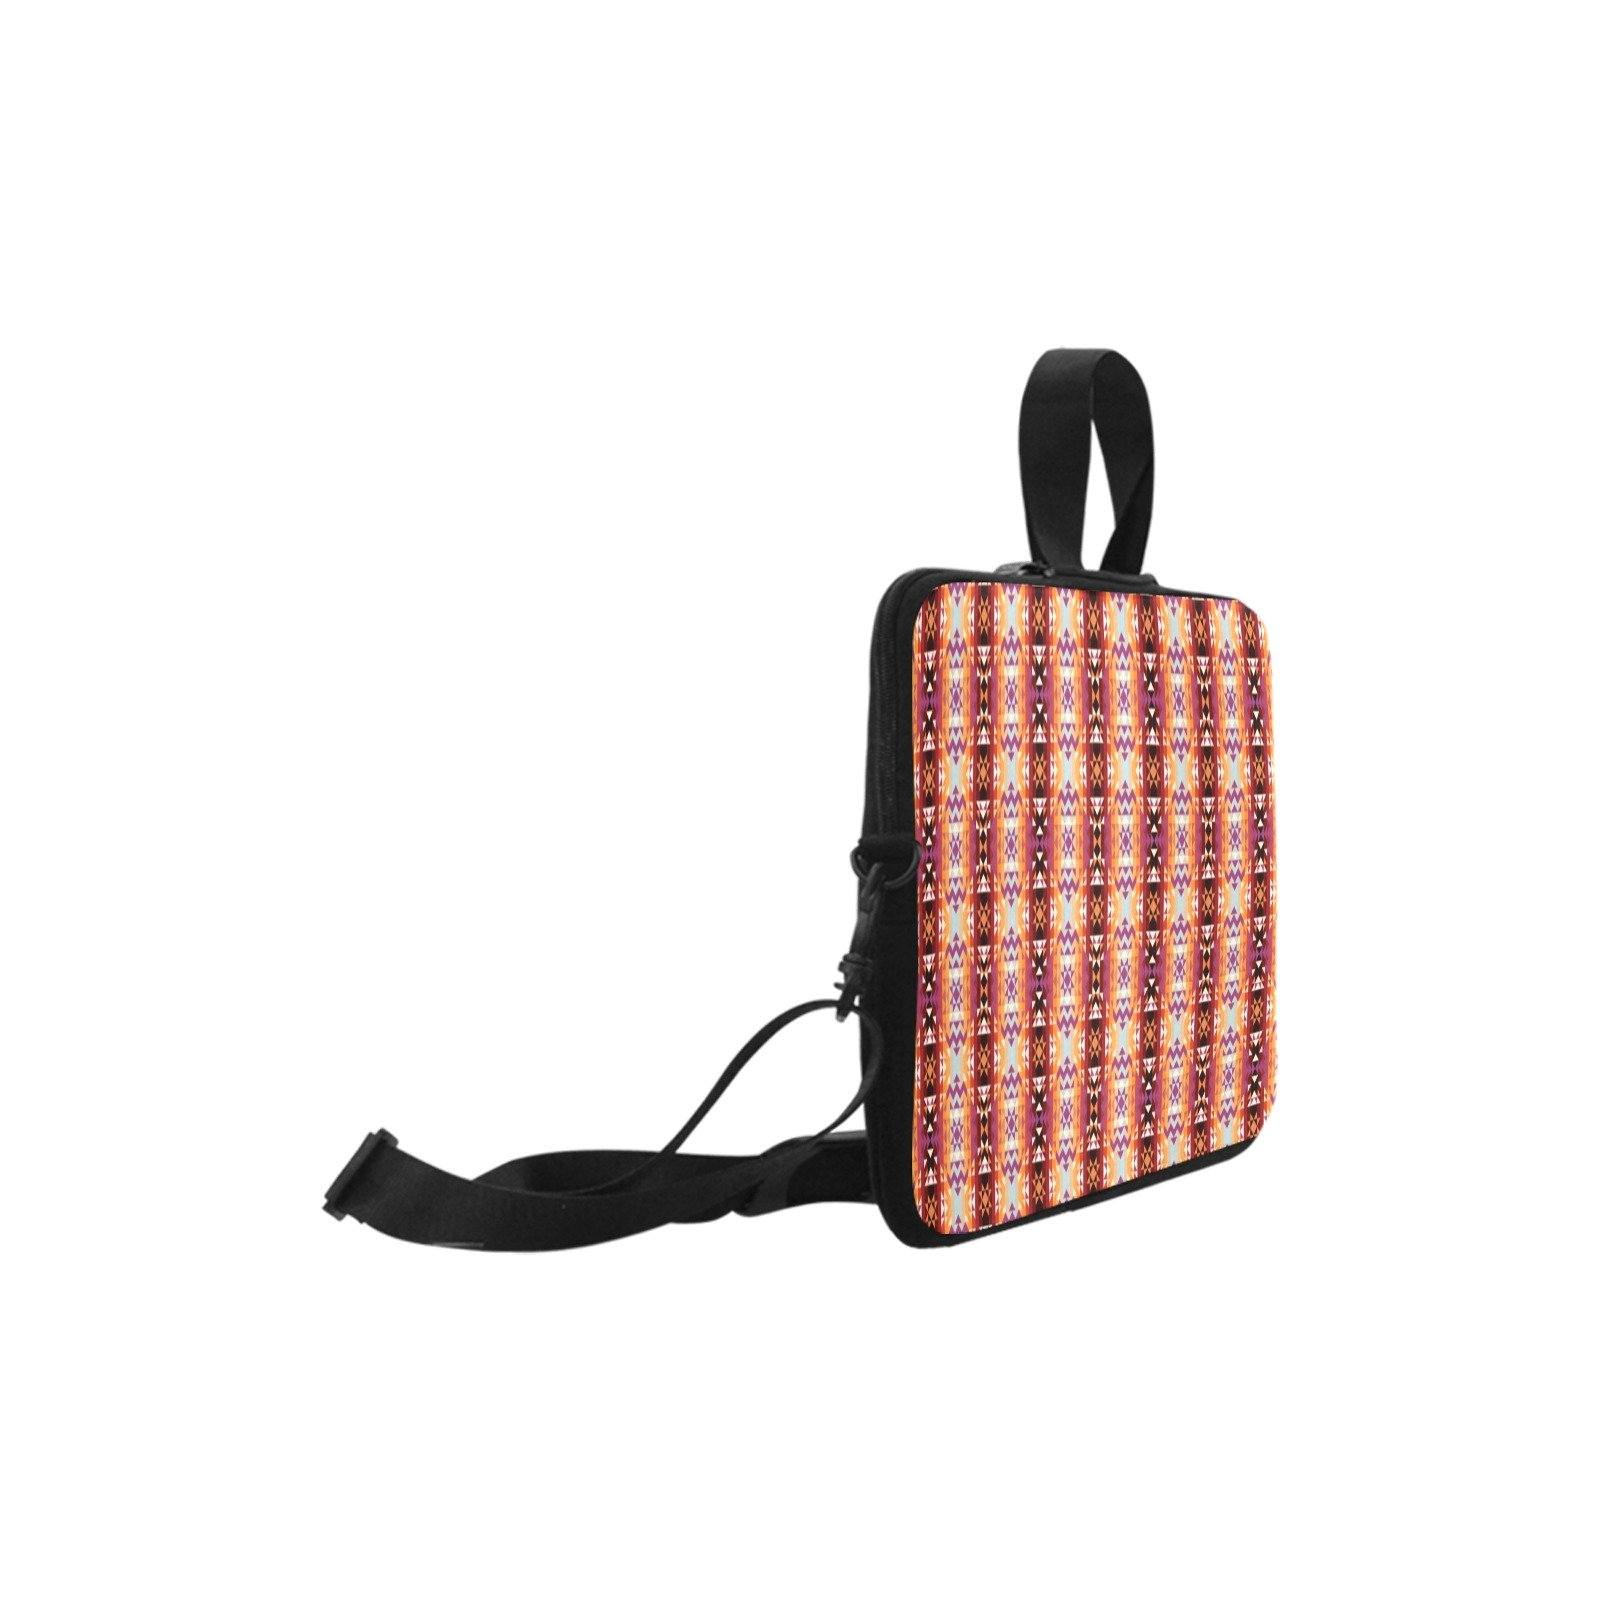 Heatwave Laptop Handbags 13" Laptop Handbags 13" e-joyer 